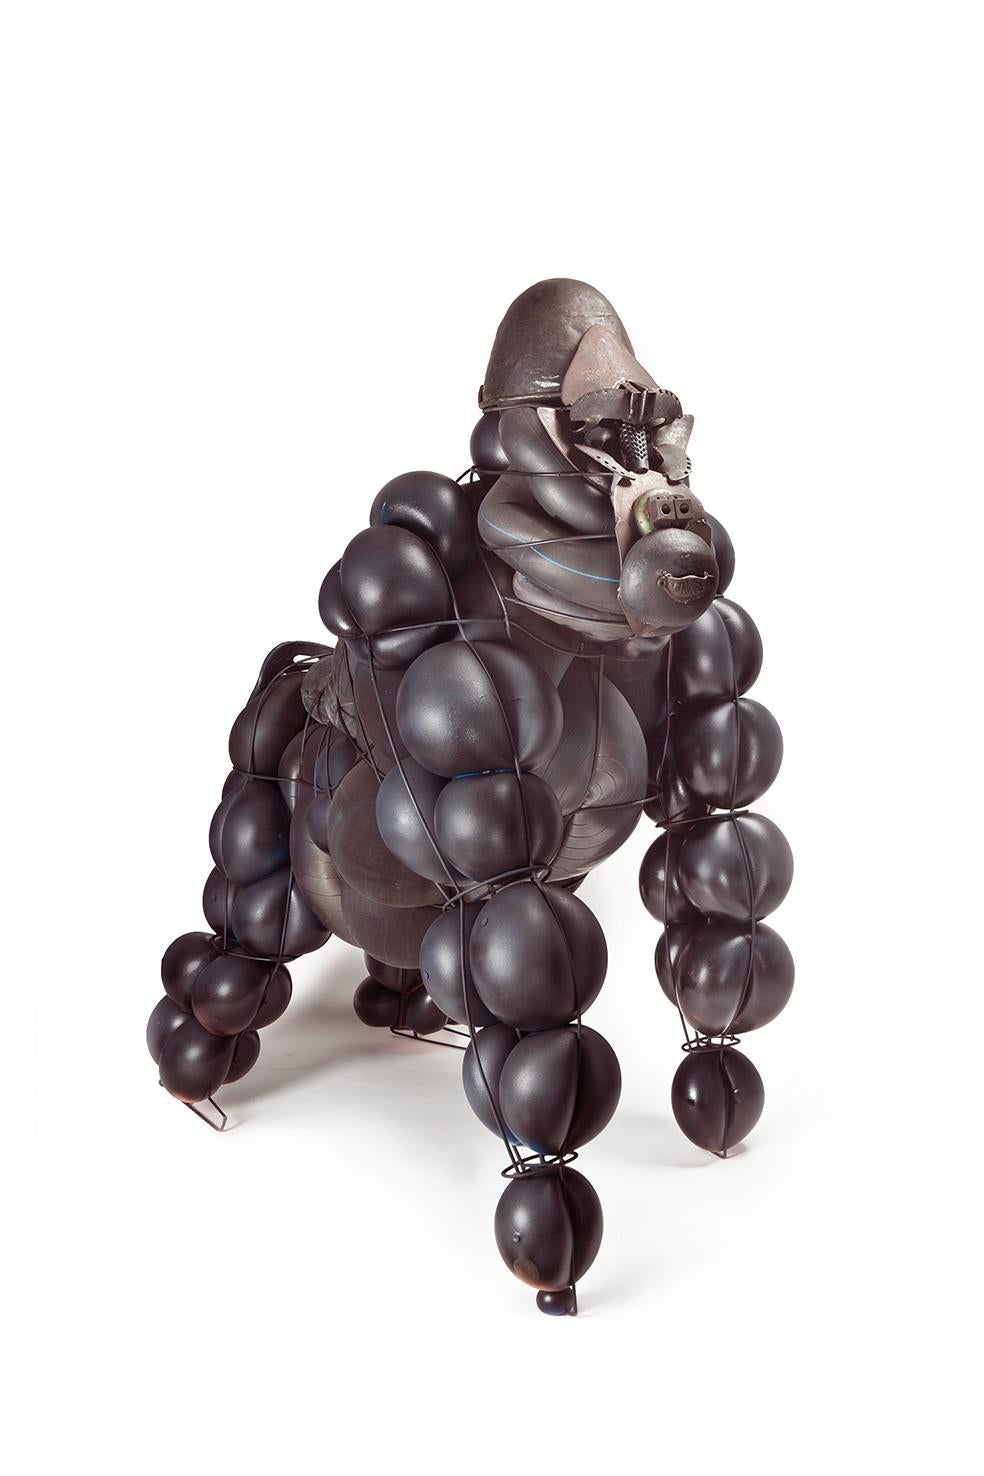 Joe, Gorila - 21st Century, Contemporary Sculpture, Figurative, Recycled Objects